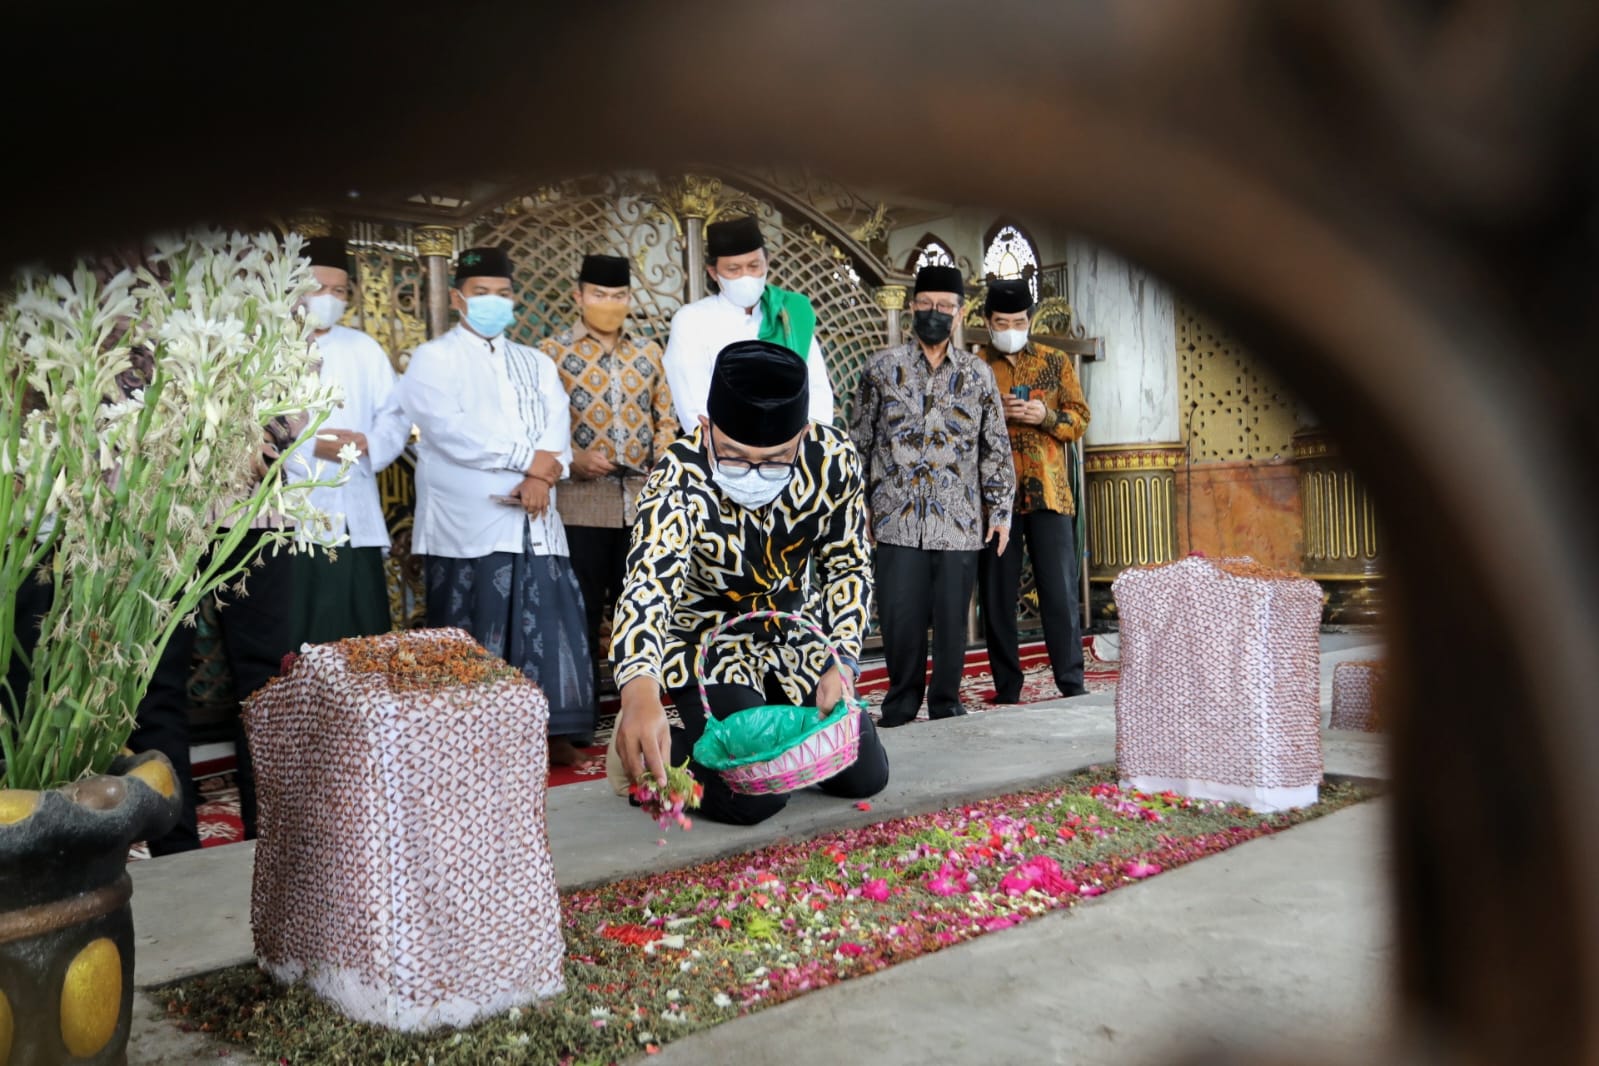 Gubernur Jawa Barat Ridwan Kamil sedang melakukan Wisata Religi dengan berziarah ke makam tokoh ulama di Bangkalan Madura